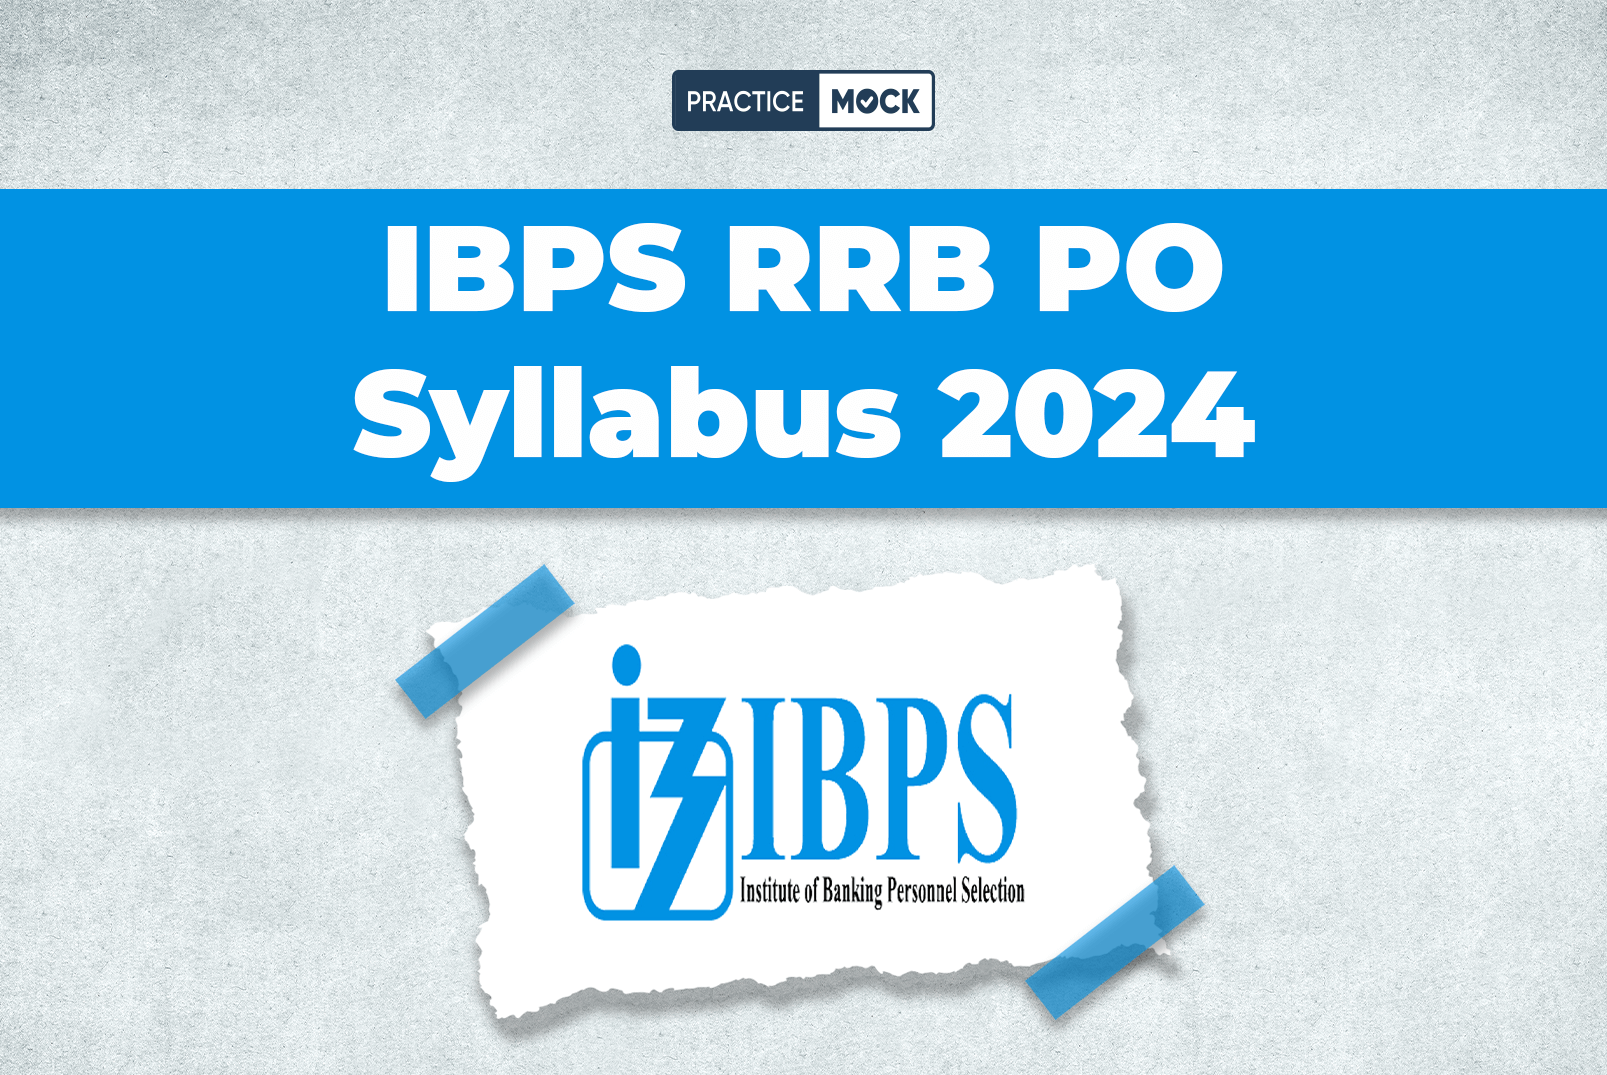 IBPS RRB PO Syllabus 2024, Detailed Prelims and Mains Topics